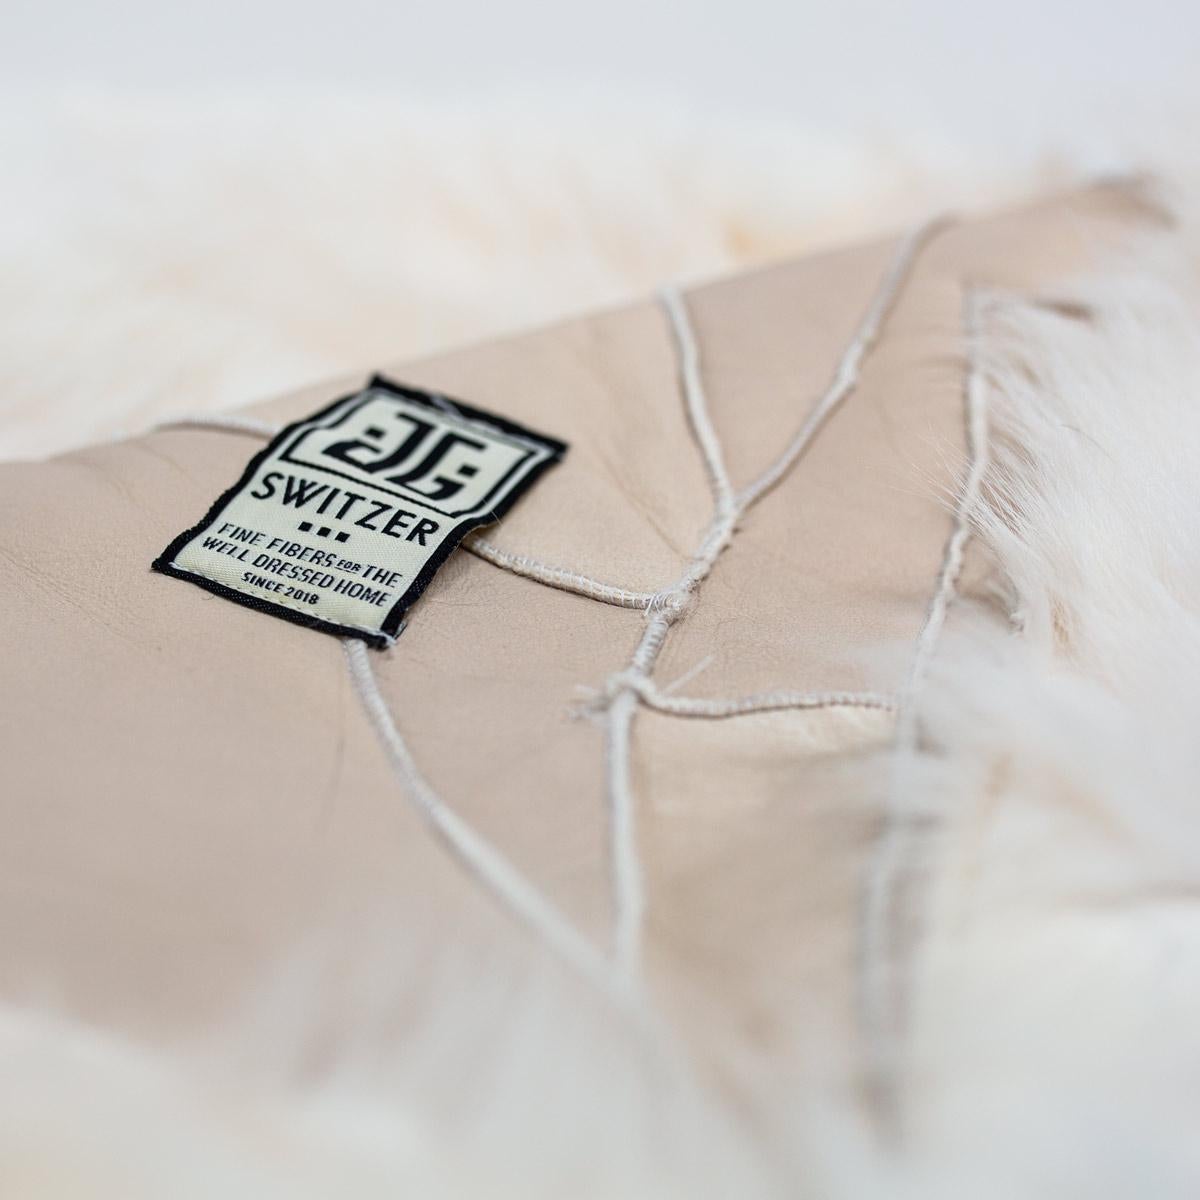 JG Switzer Toscana Real Fur LARGE Blanket Unlined in Bone Grey For Sale 3